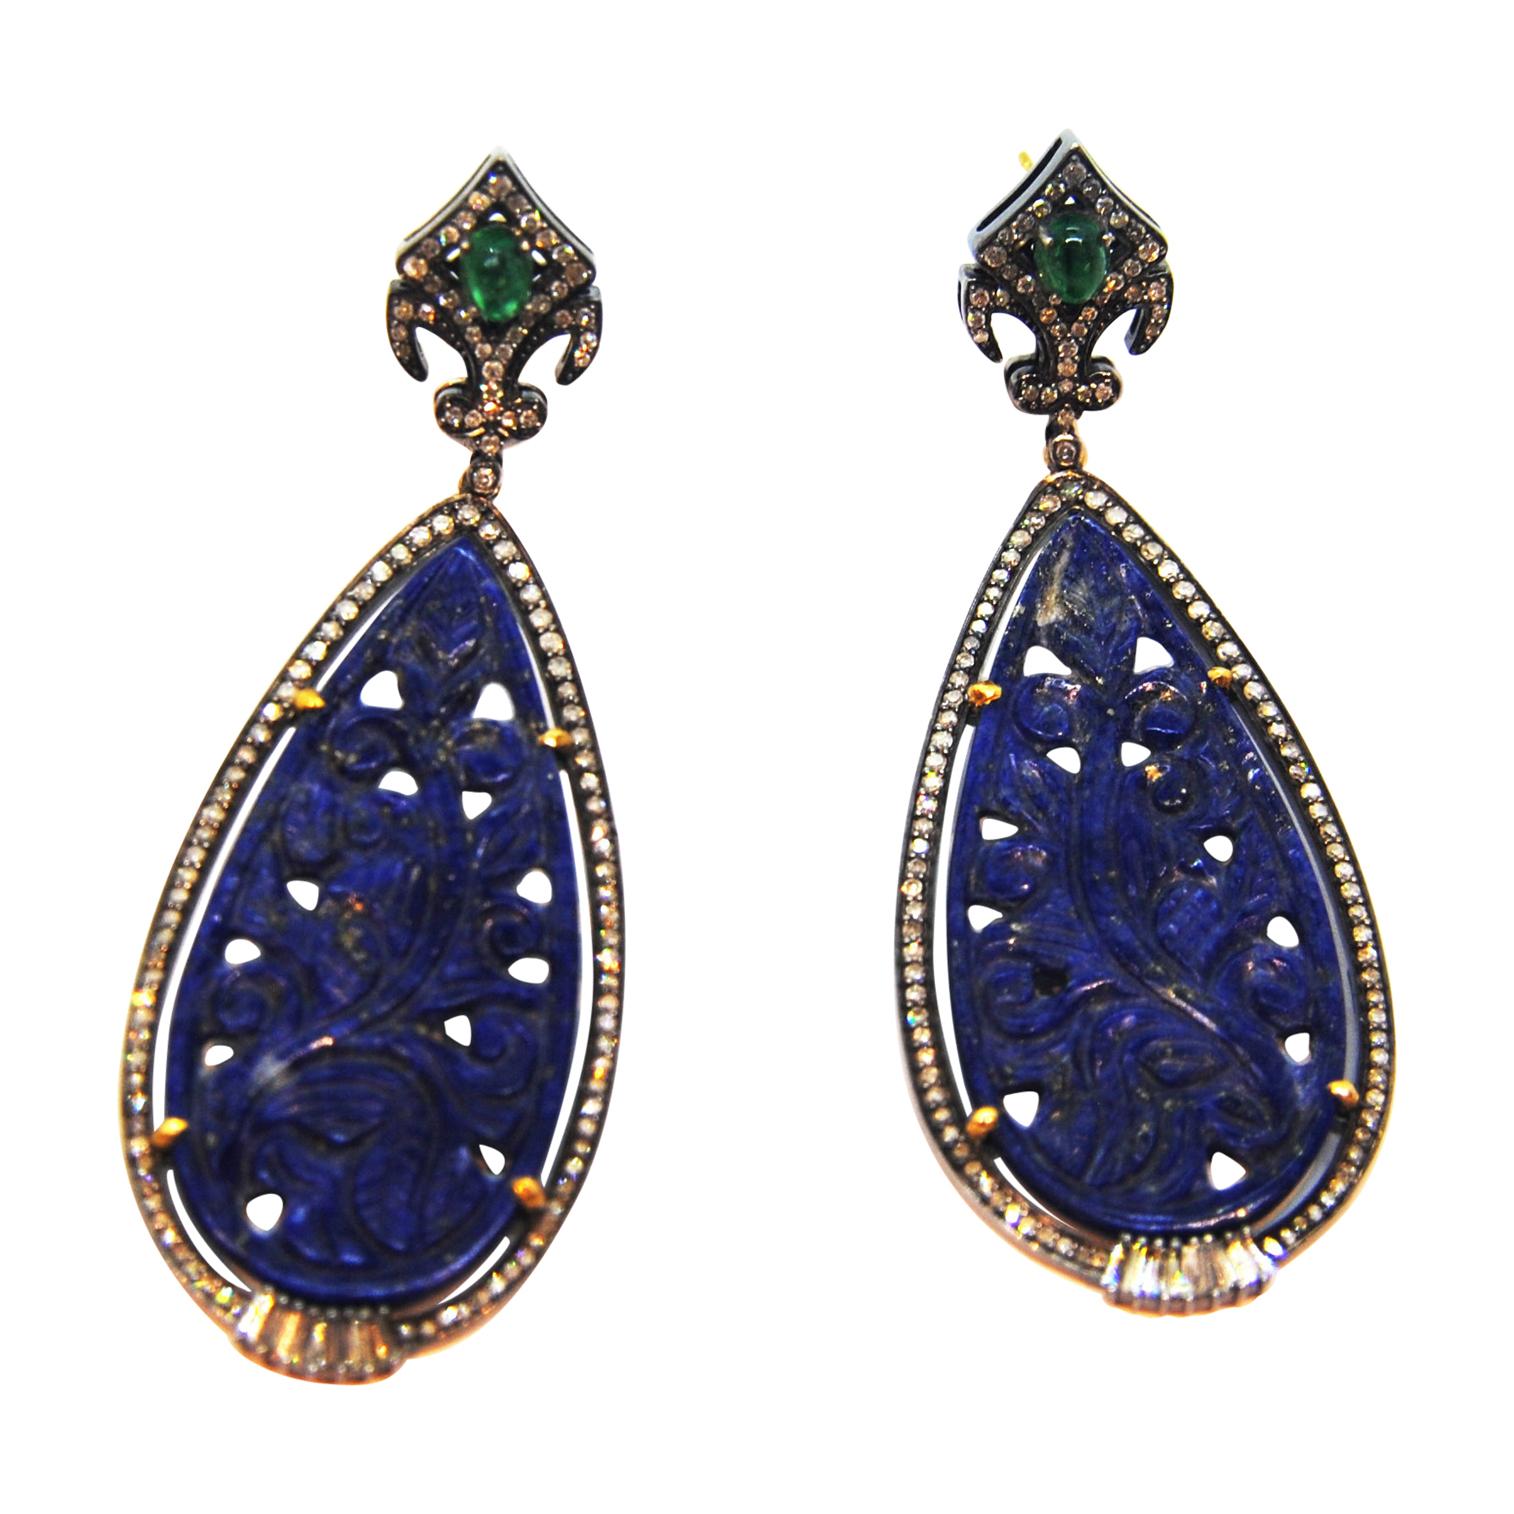 Oriental Style Carved Lapislazuli, Diamond and Emerald 18kt Gold Silver Earrings